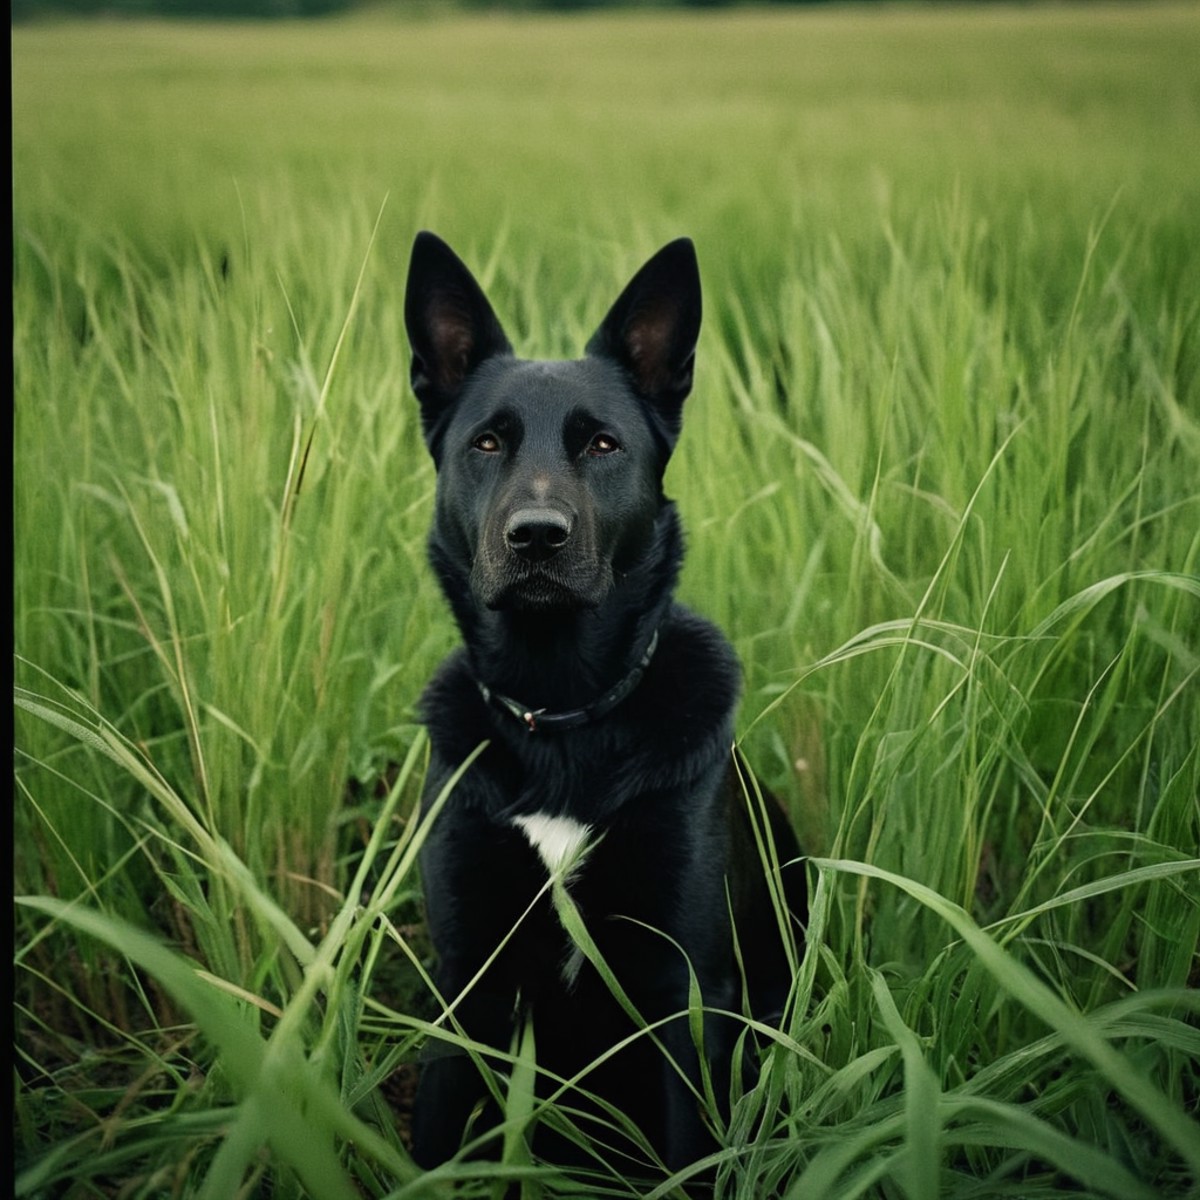 cinematic film still of <lora:Film Grain style:1.2>
Film grain still image of a dog sitting in a field of tall grass,1girl...